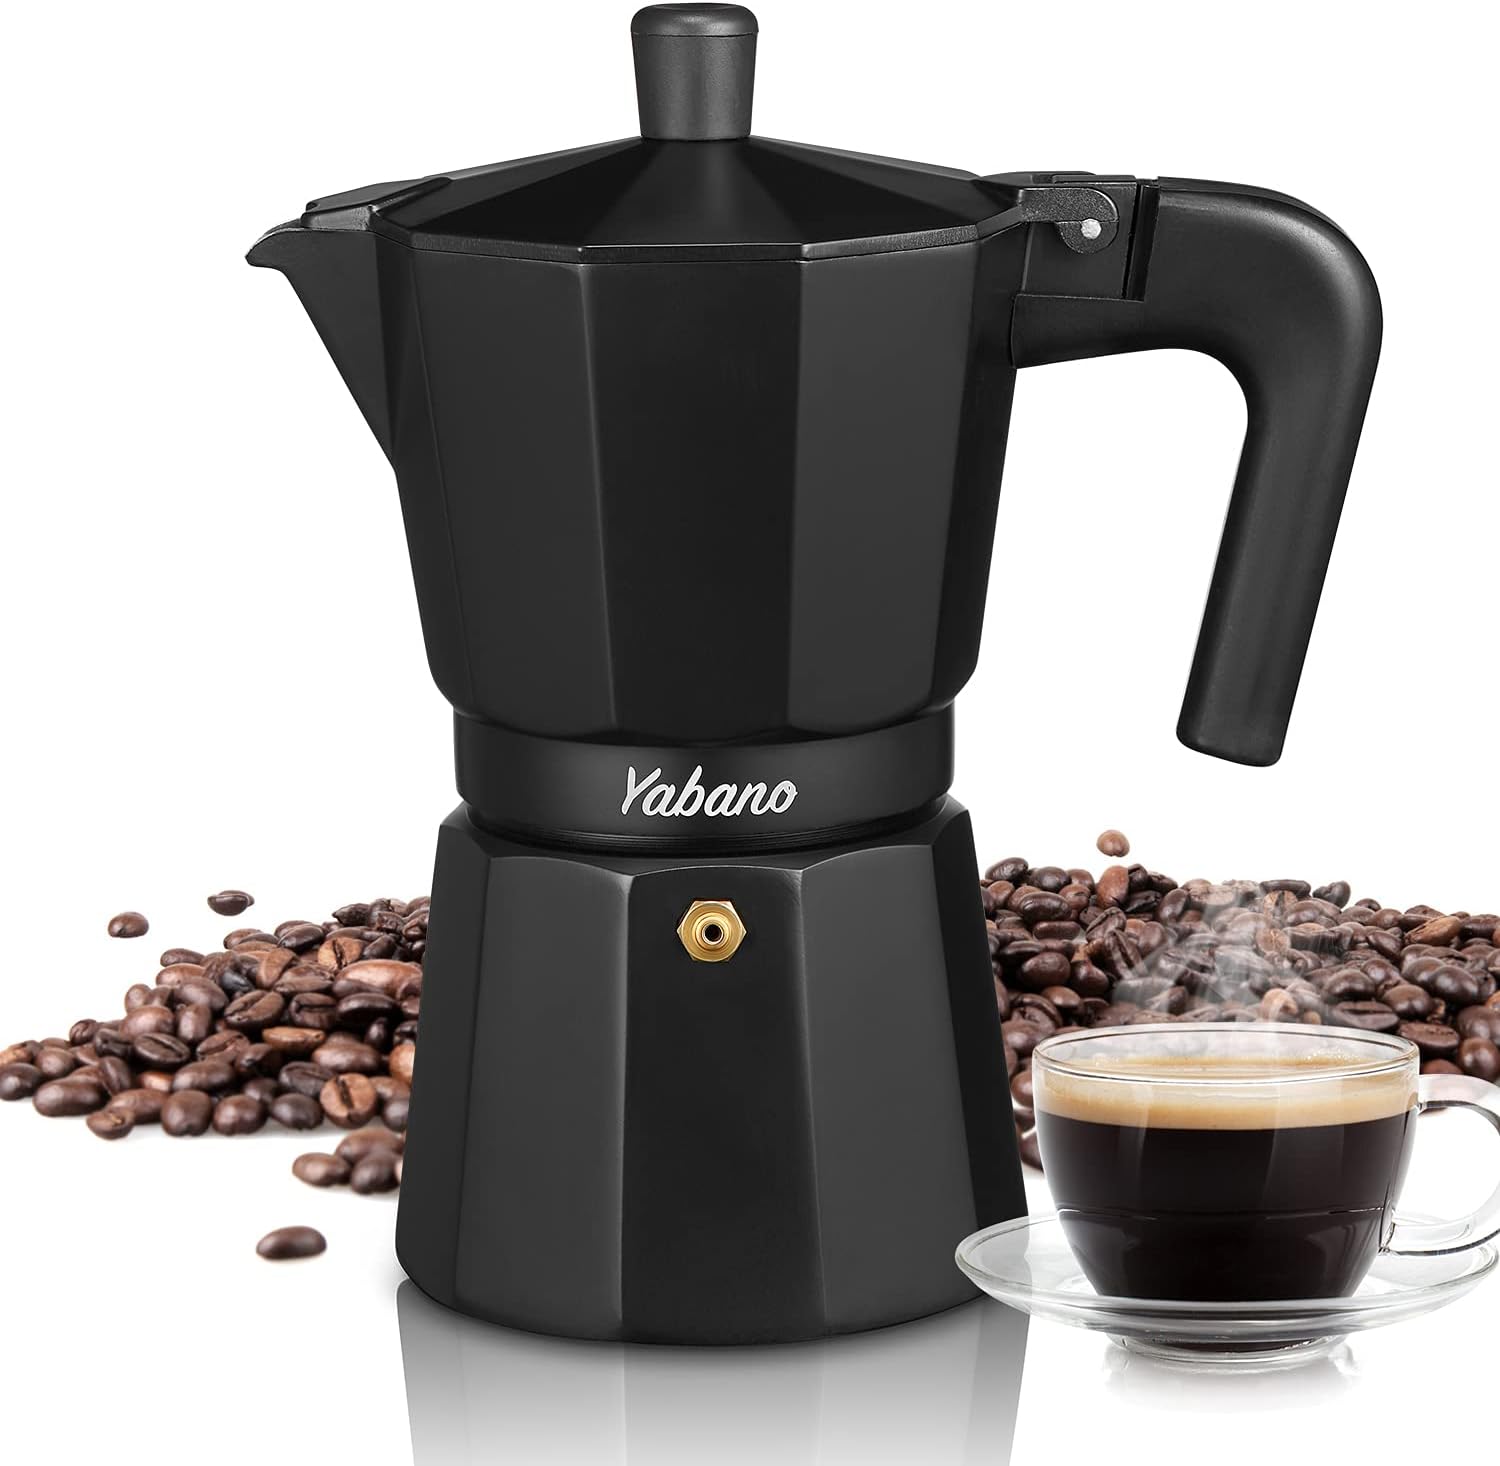 Yabano Stovetop Espresso Maker Review